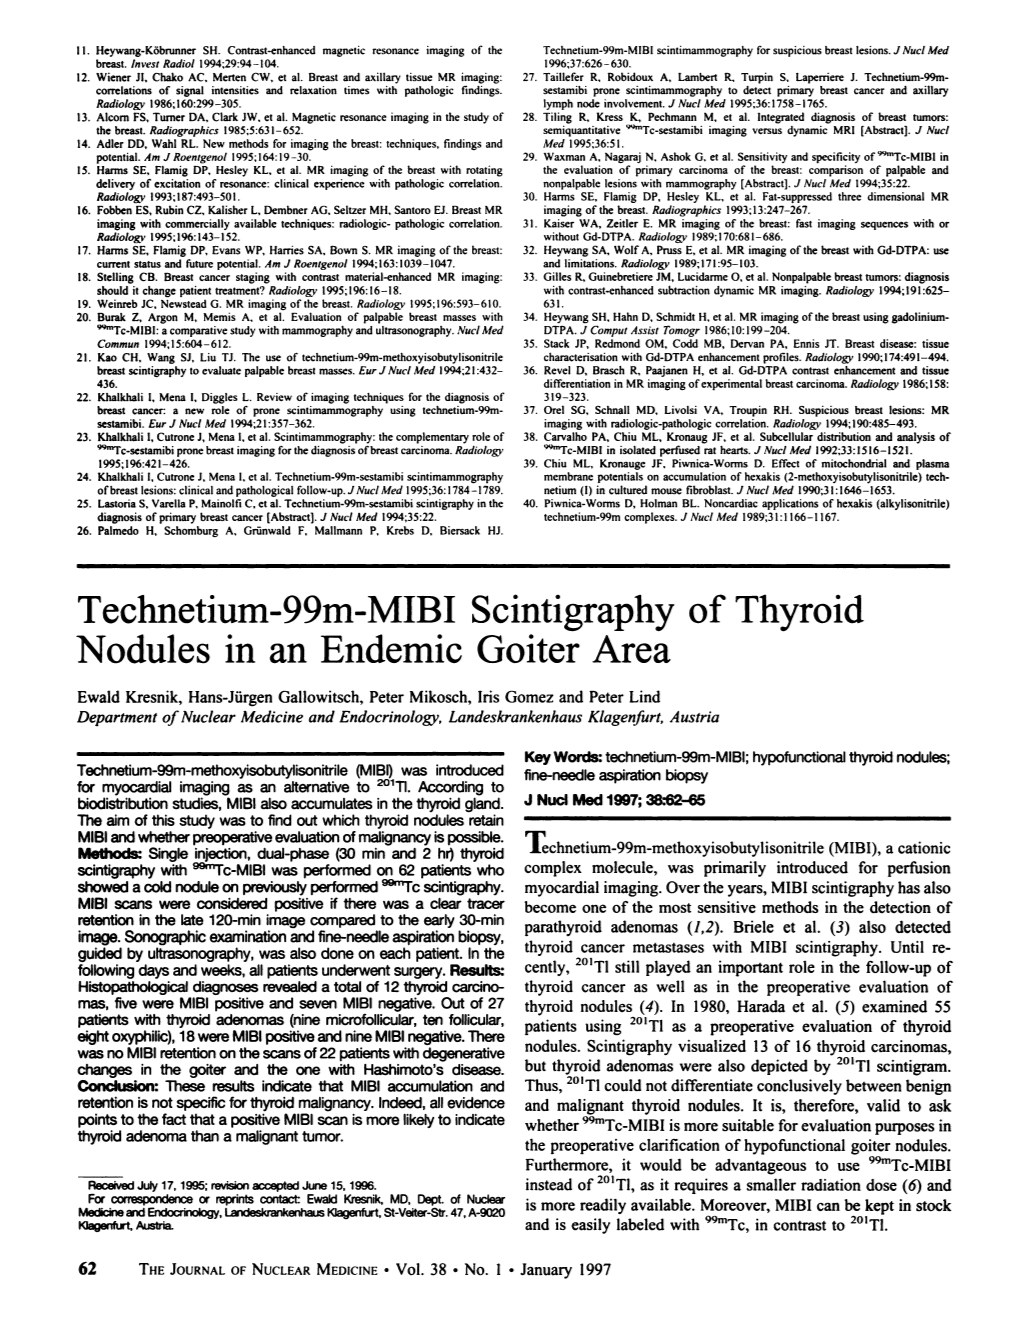 Technetium-99M-MIBI Scintigraphy of Thyroid Nodules in an Endemic Goiter Area